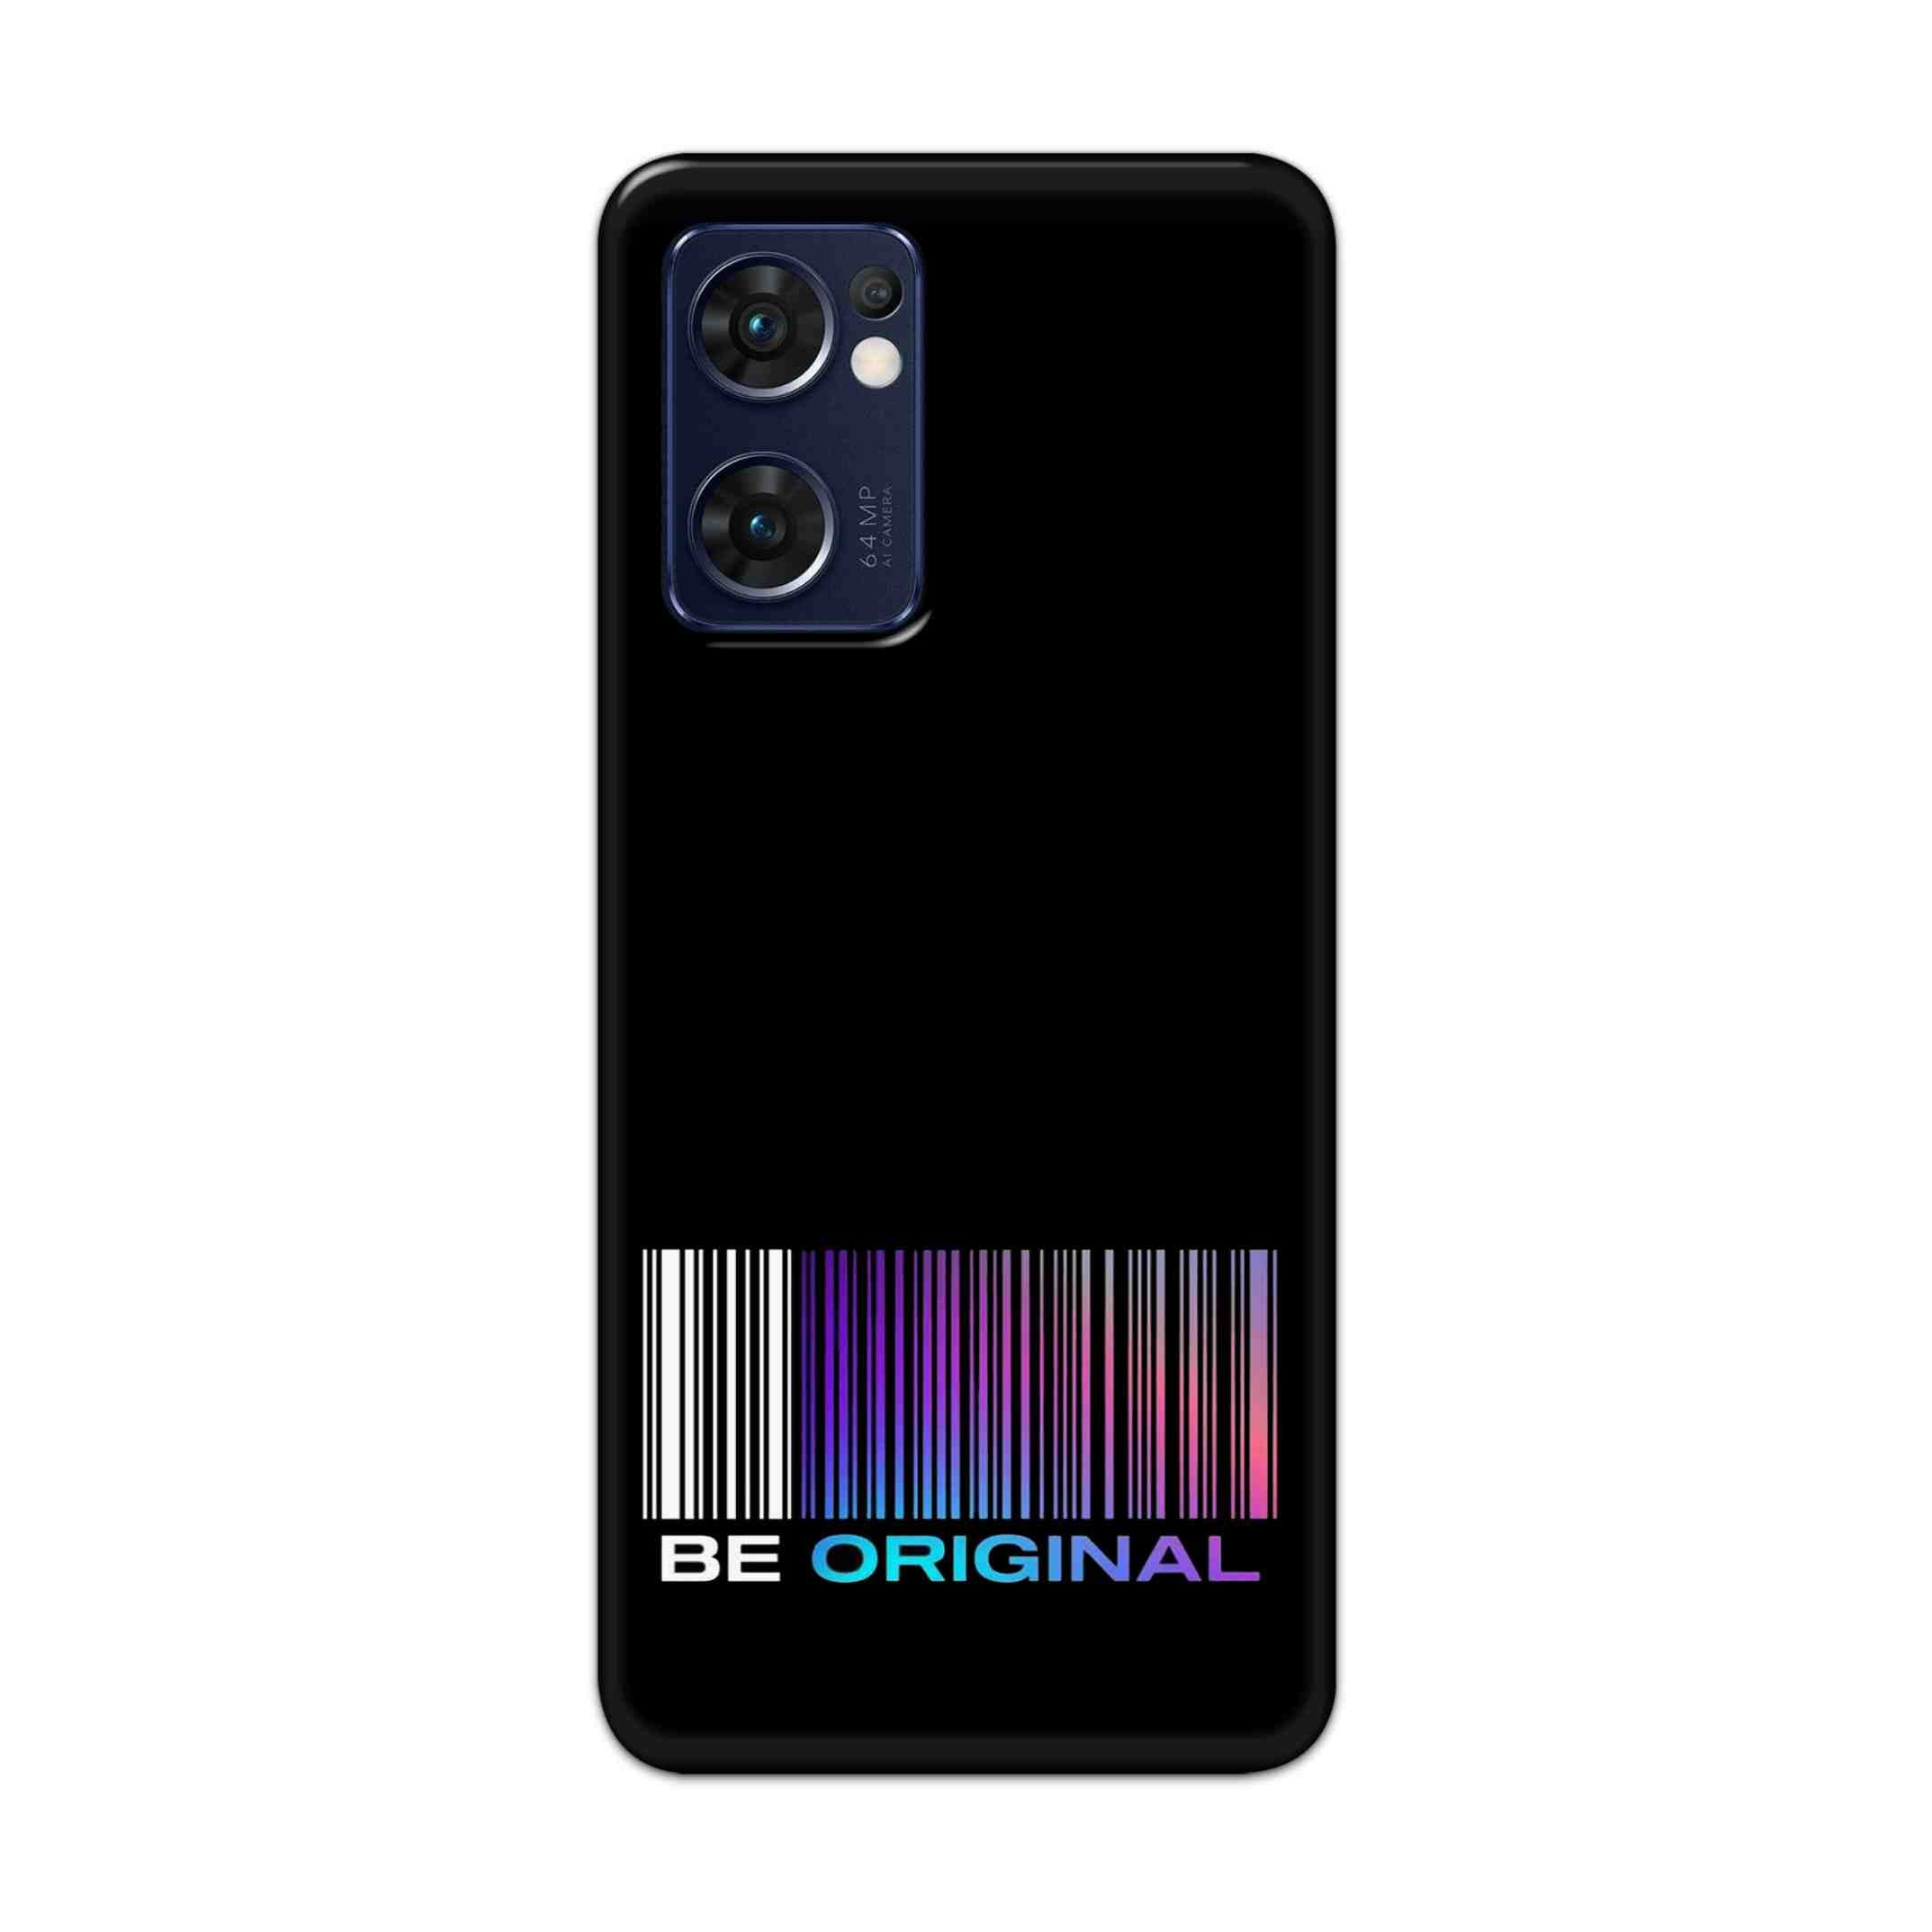 Buy Be Original Hard Back Mobile Phone Case Cover For Reno 7 5G Online